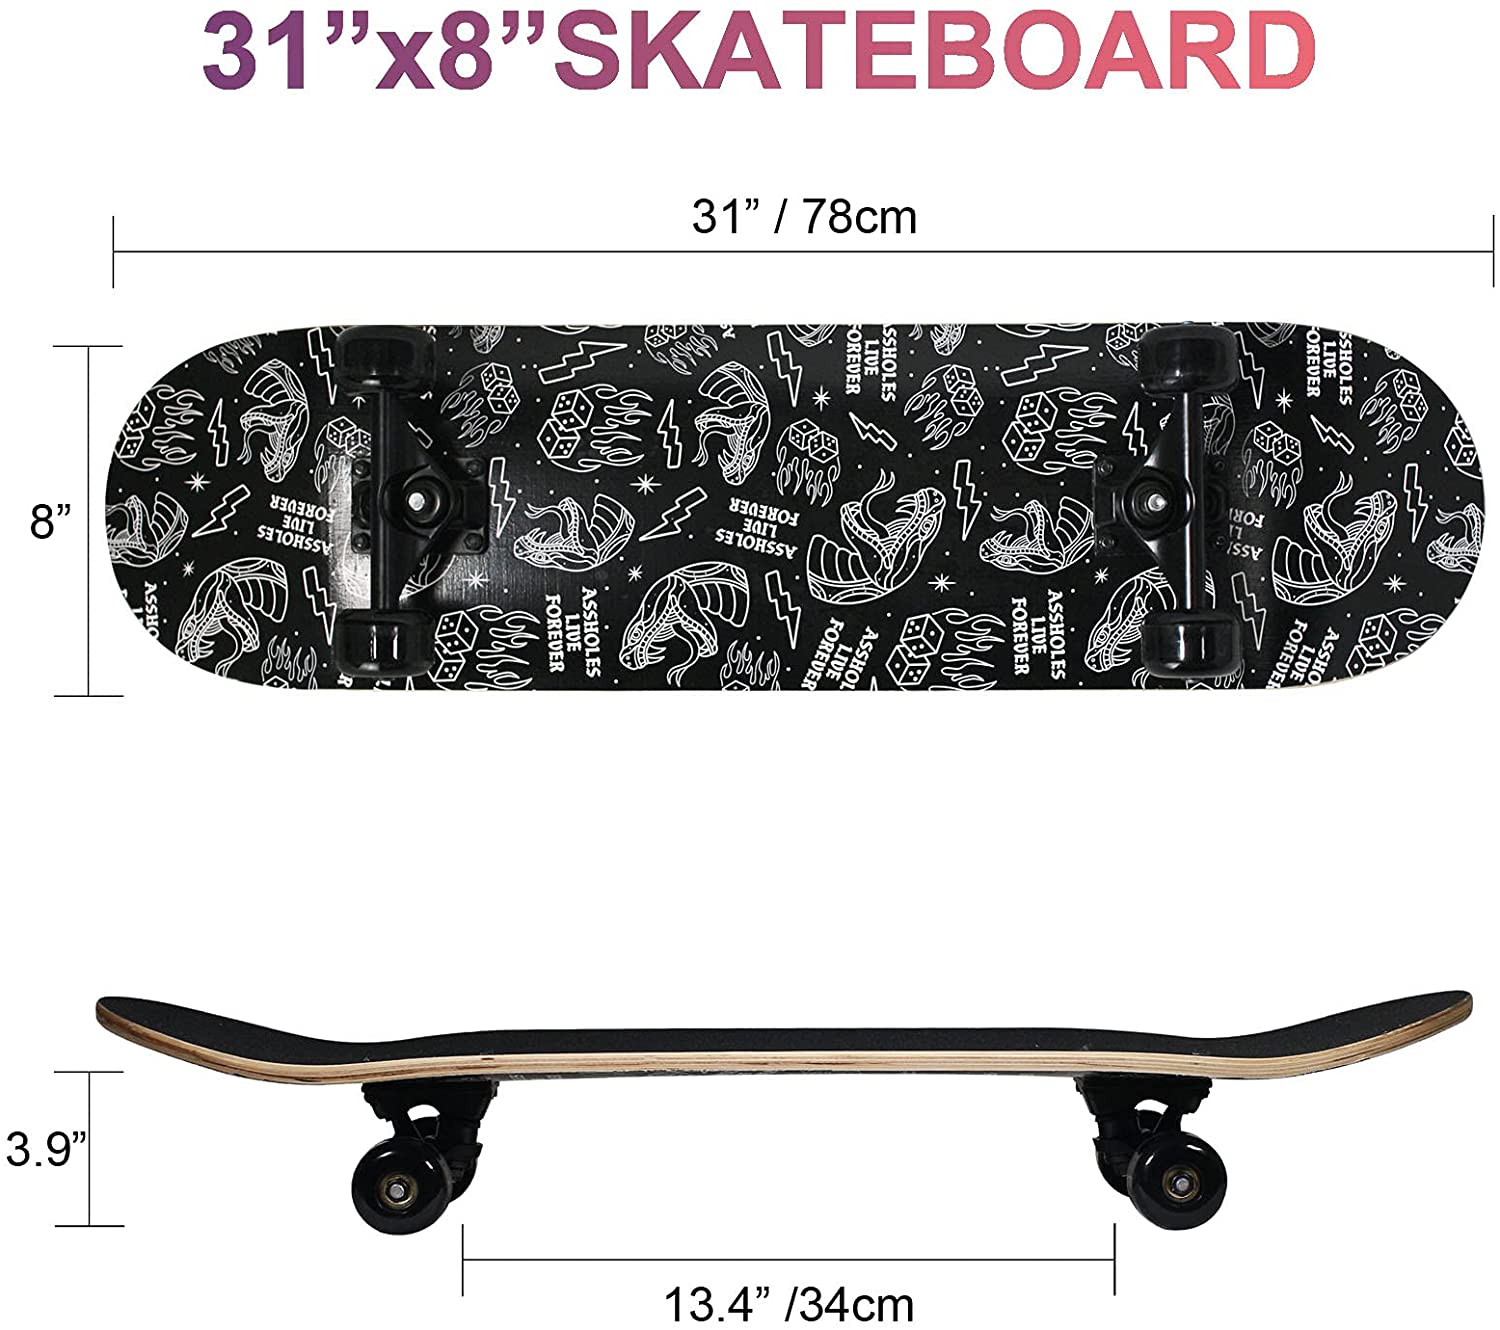 Toyship's 31"x8" Skateboards - TOYSHIP